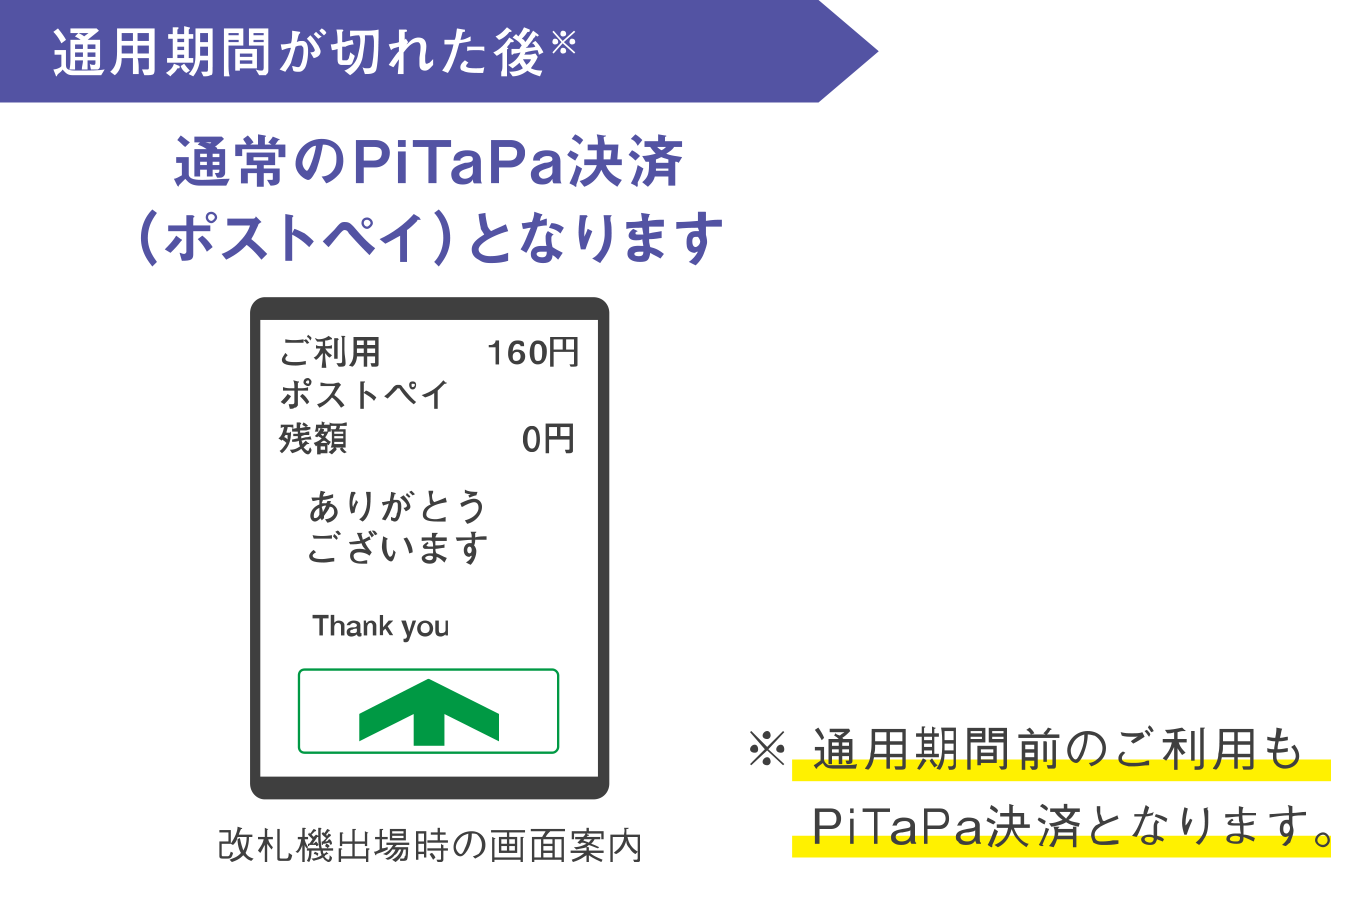 PiTaPa定期券の通用期間が切れた後の改札機出場時の画面案内は、通常のPiTaPa決済（ポストペイ）となります。尚、通用期間前のご利用もPiTaPa決済となります。